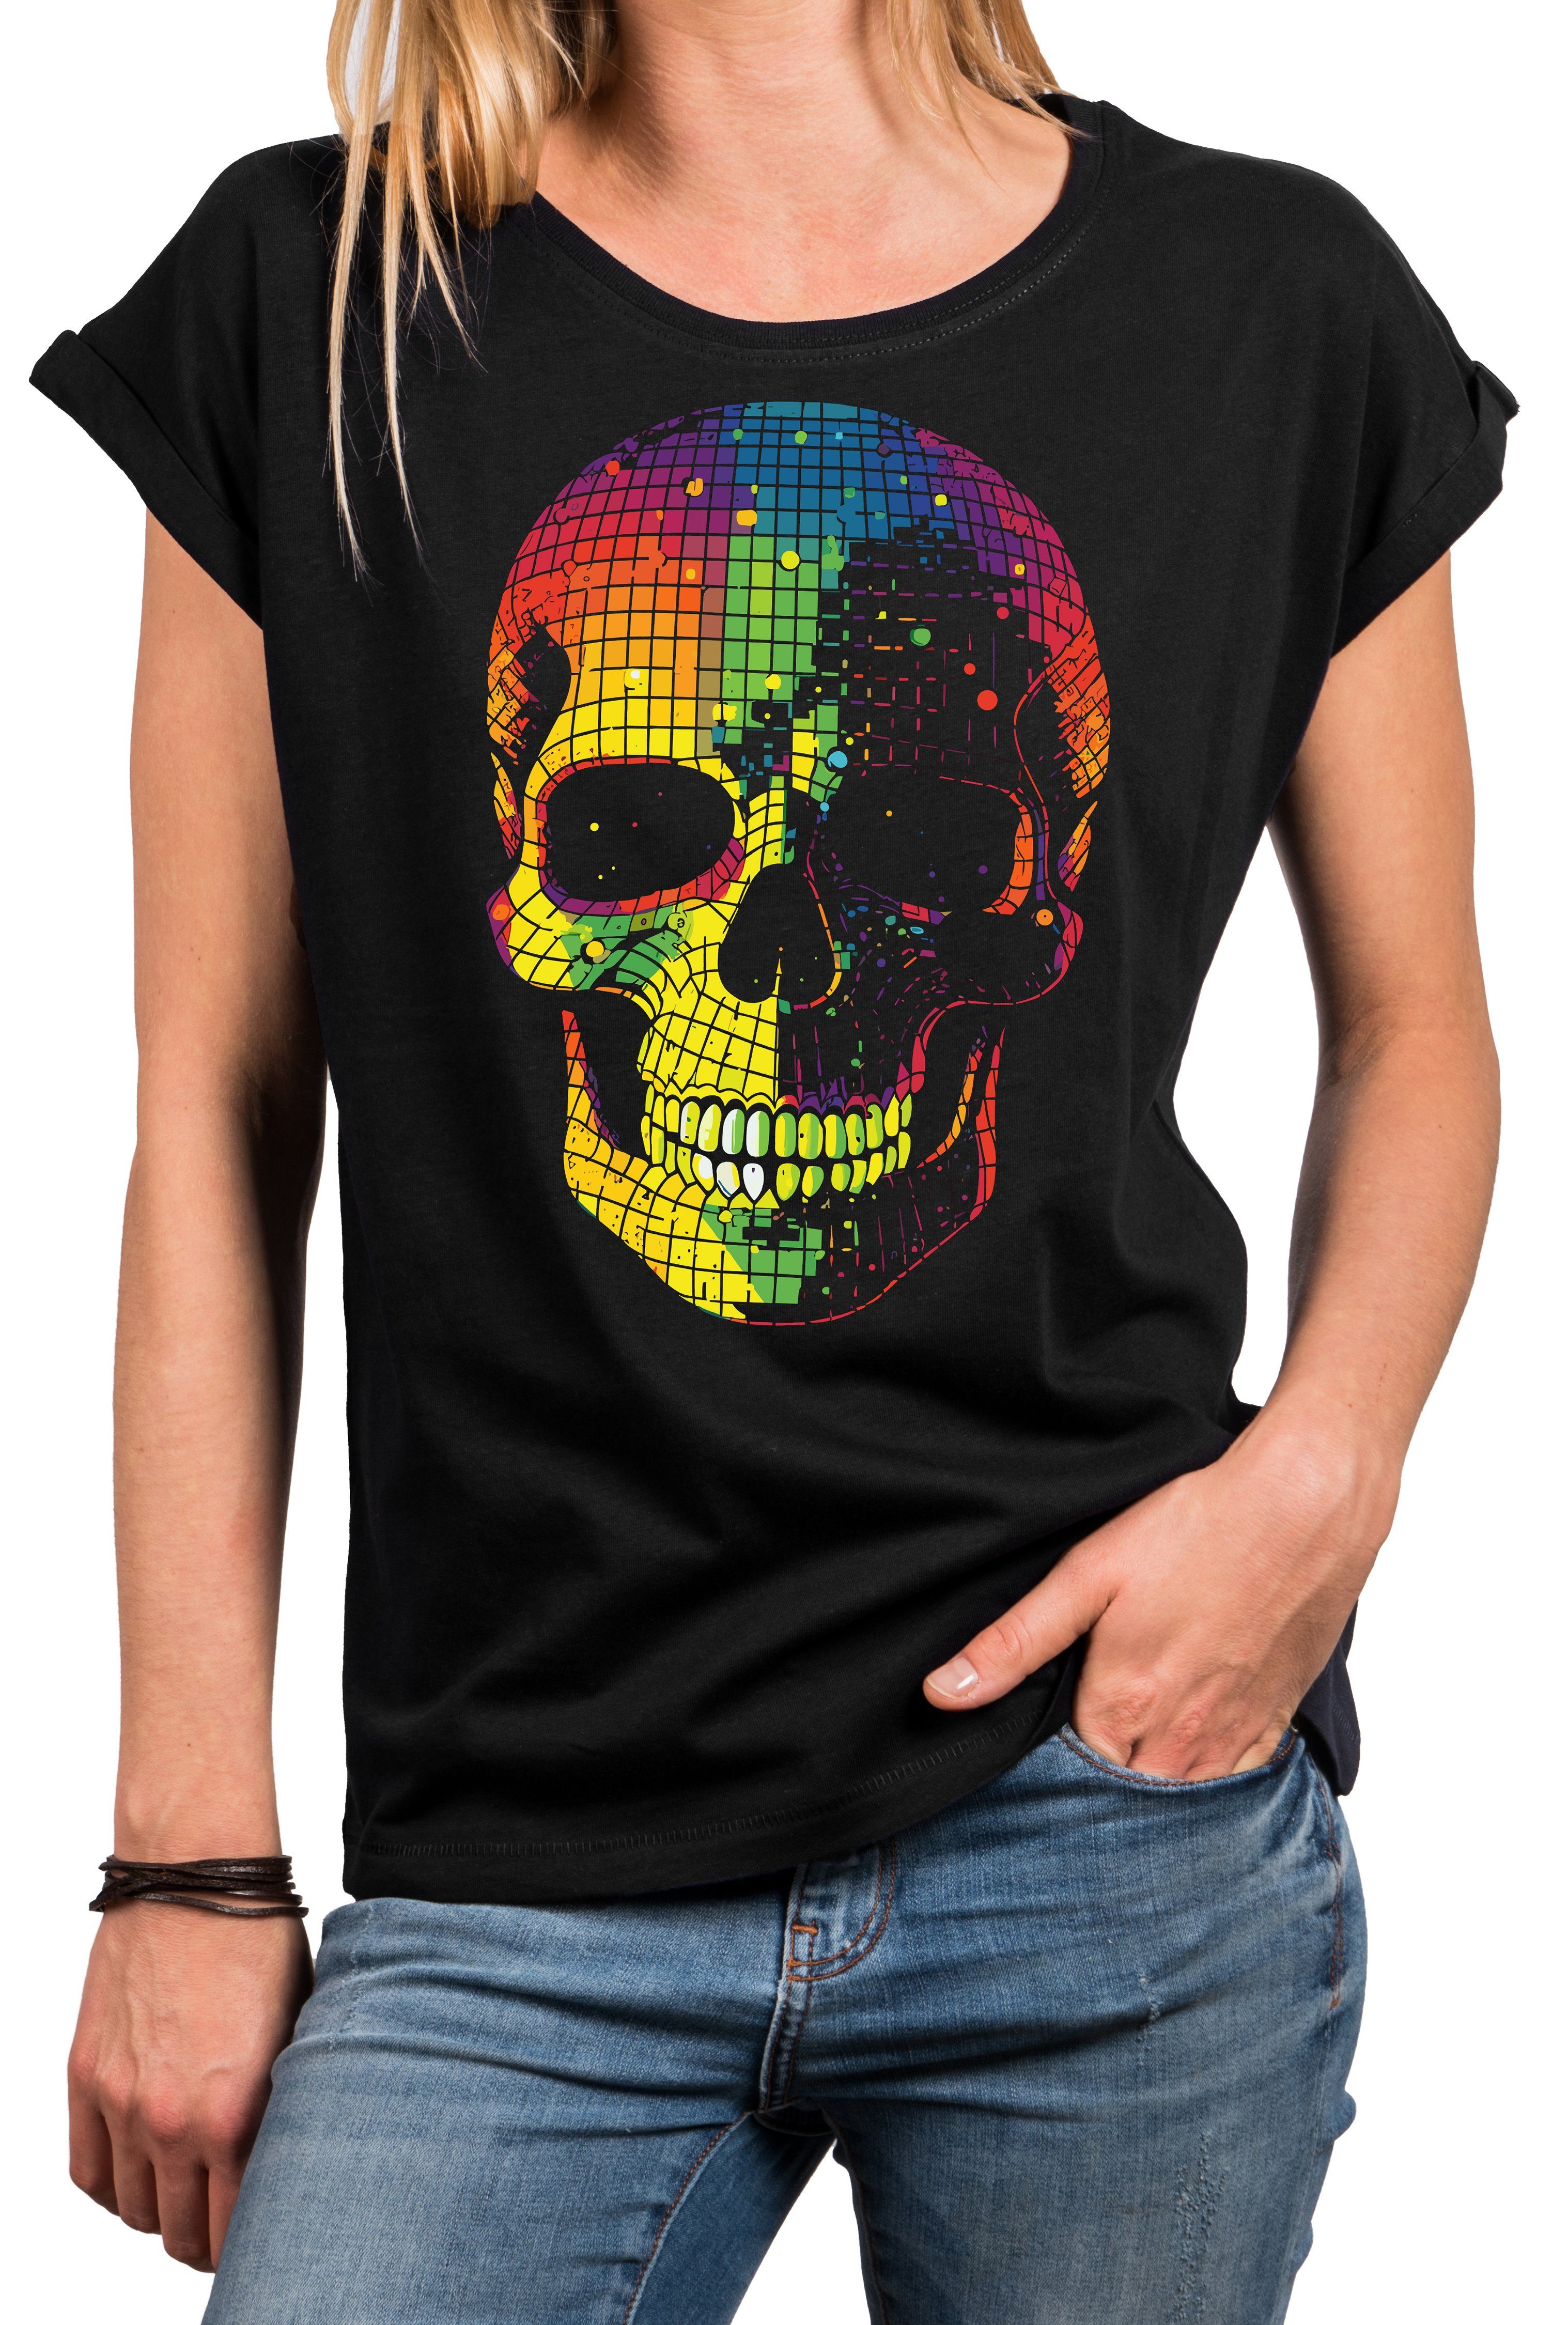 MAKAYA Print-Shirt Damen Skull Kurzarmshirt, Sommer Kurzarm rockige Totenkopf Oberteile Baumwolle Motiv Top Disco